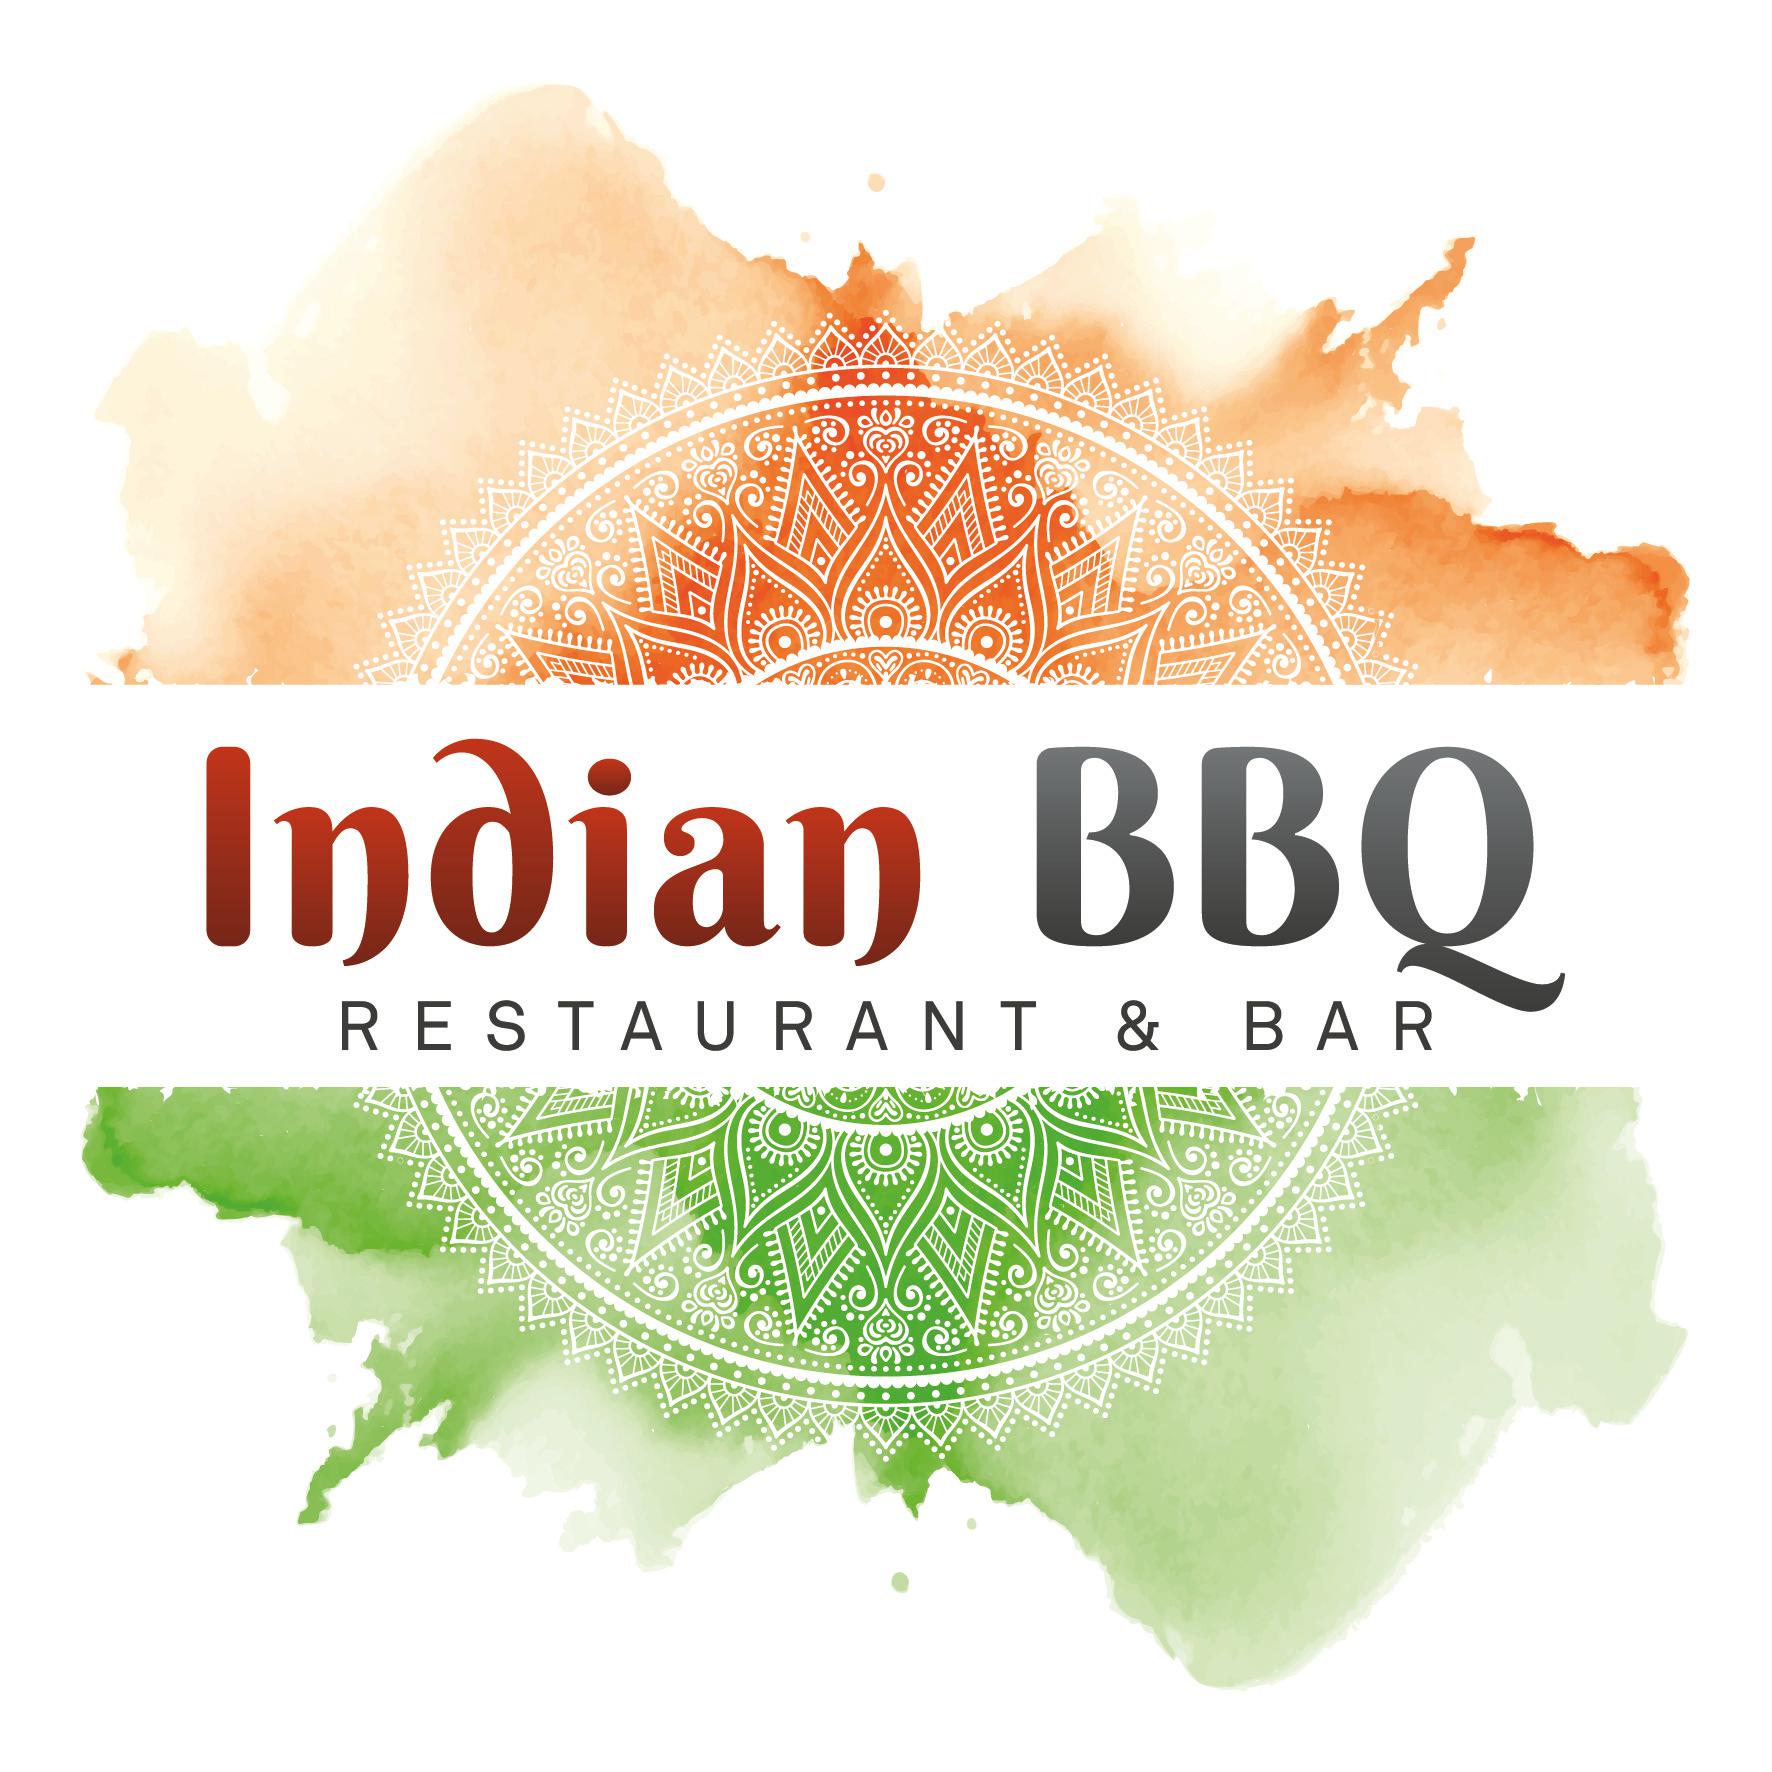 Indian BBQ Restaurant & Bar Logo